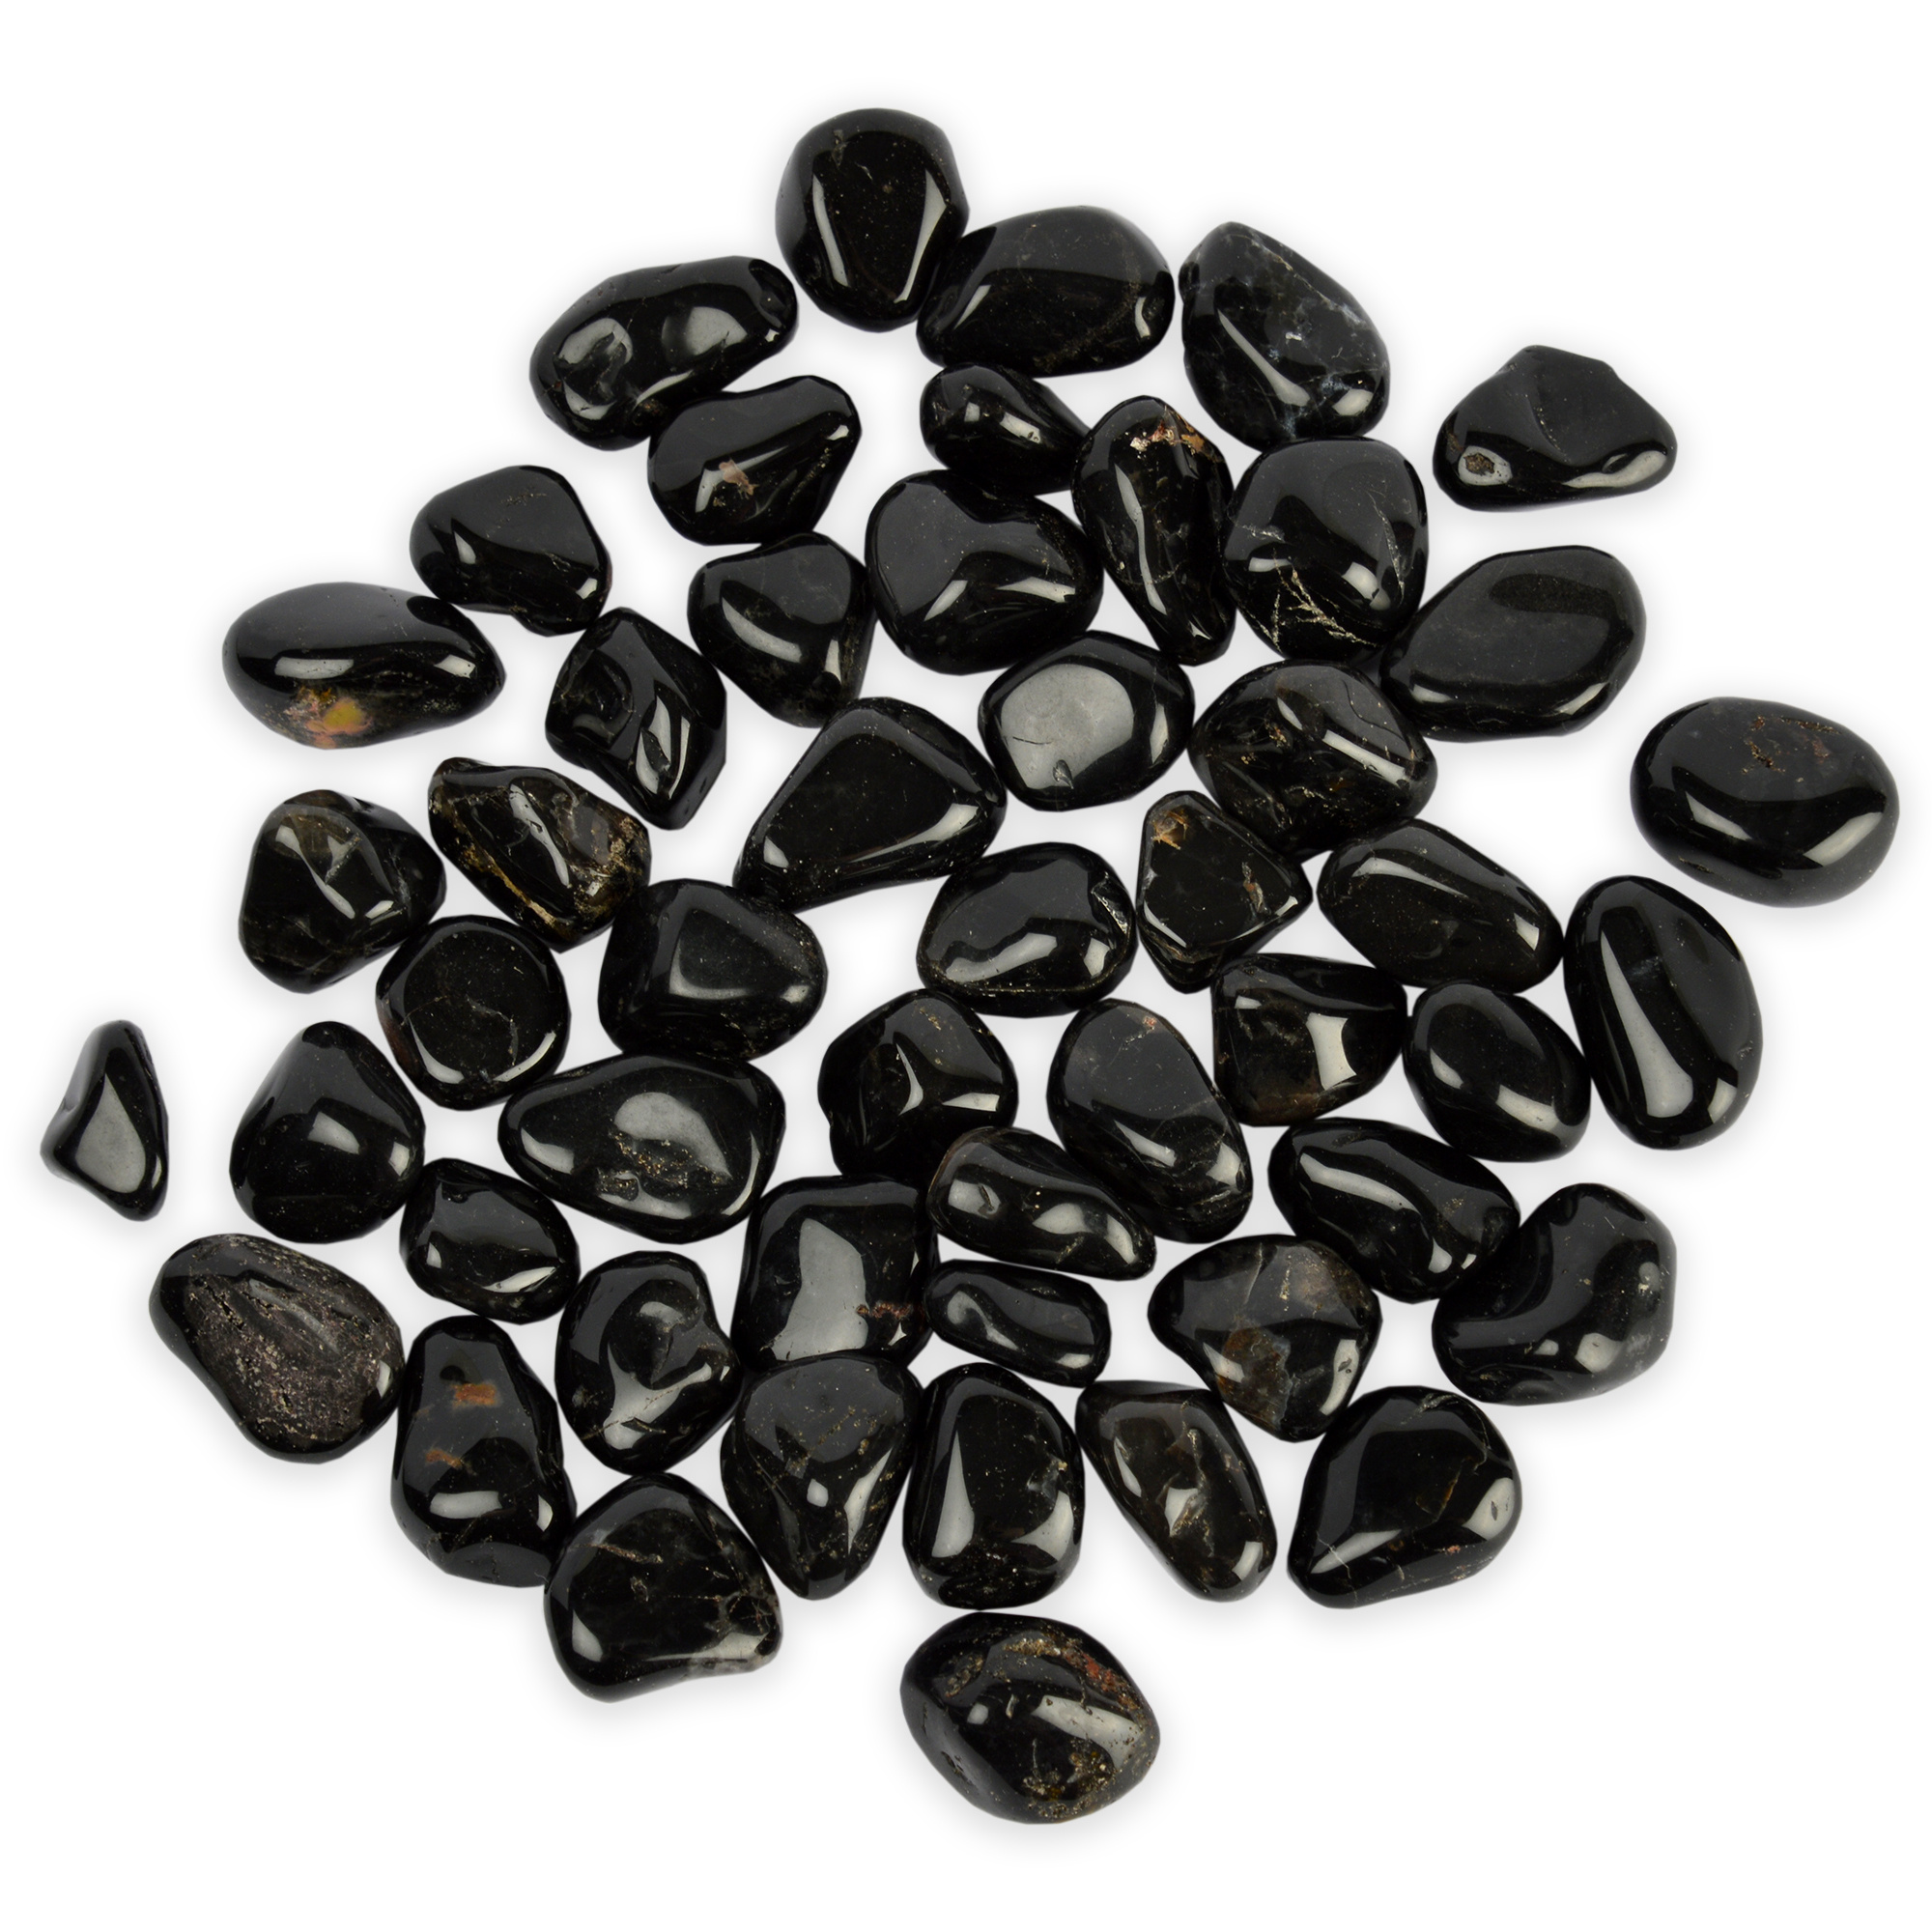 Onyx, Large black tumbled gemstones, Earth's natural wonders, Ancient healing properties, 2000x2000 HD Handy